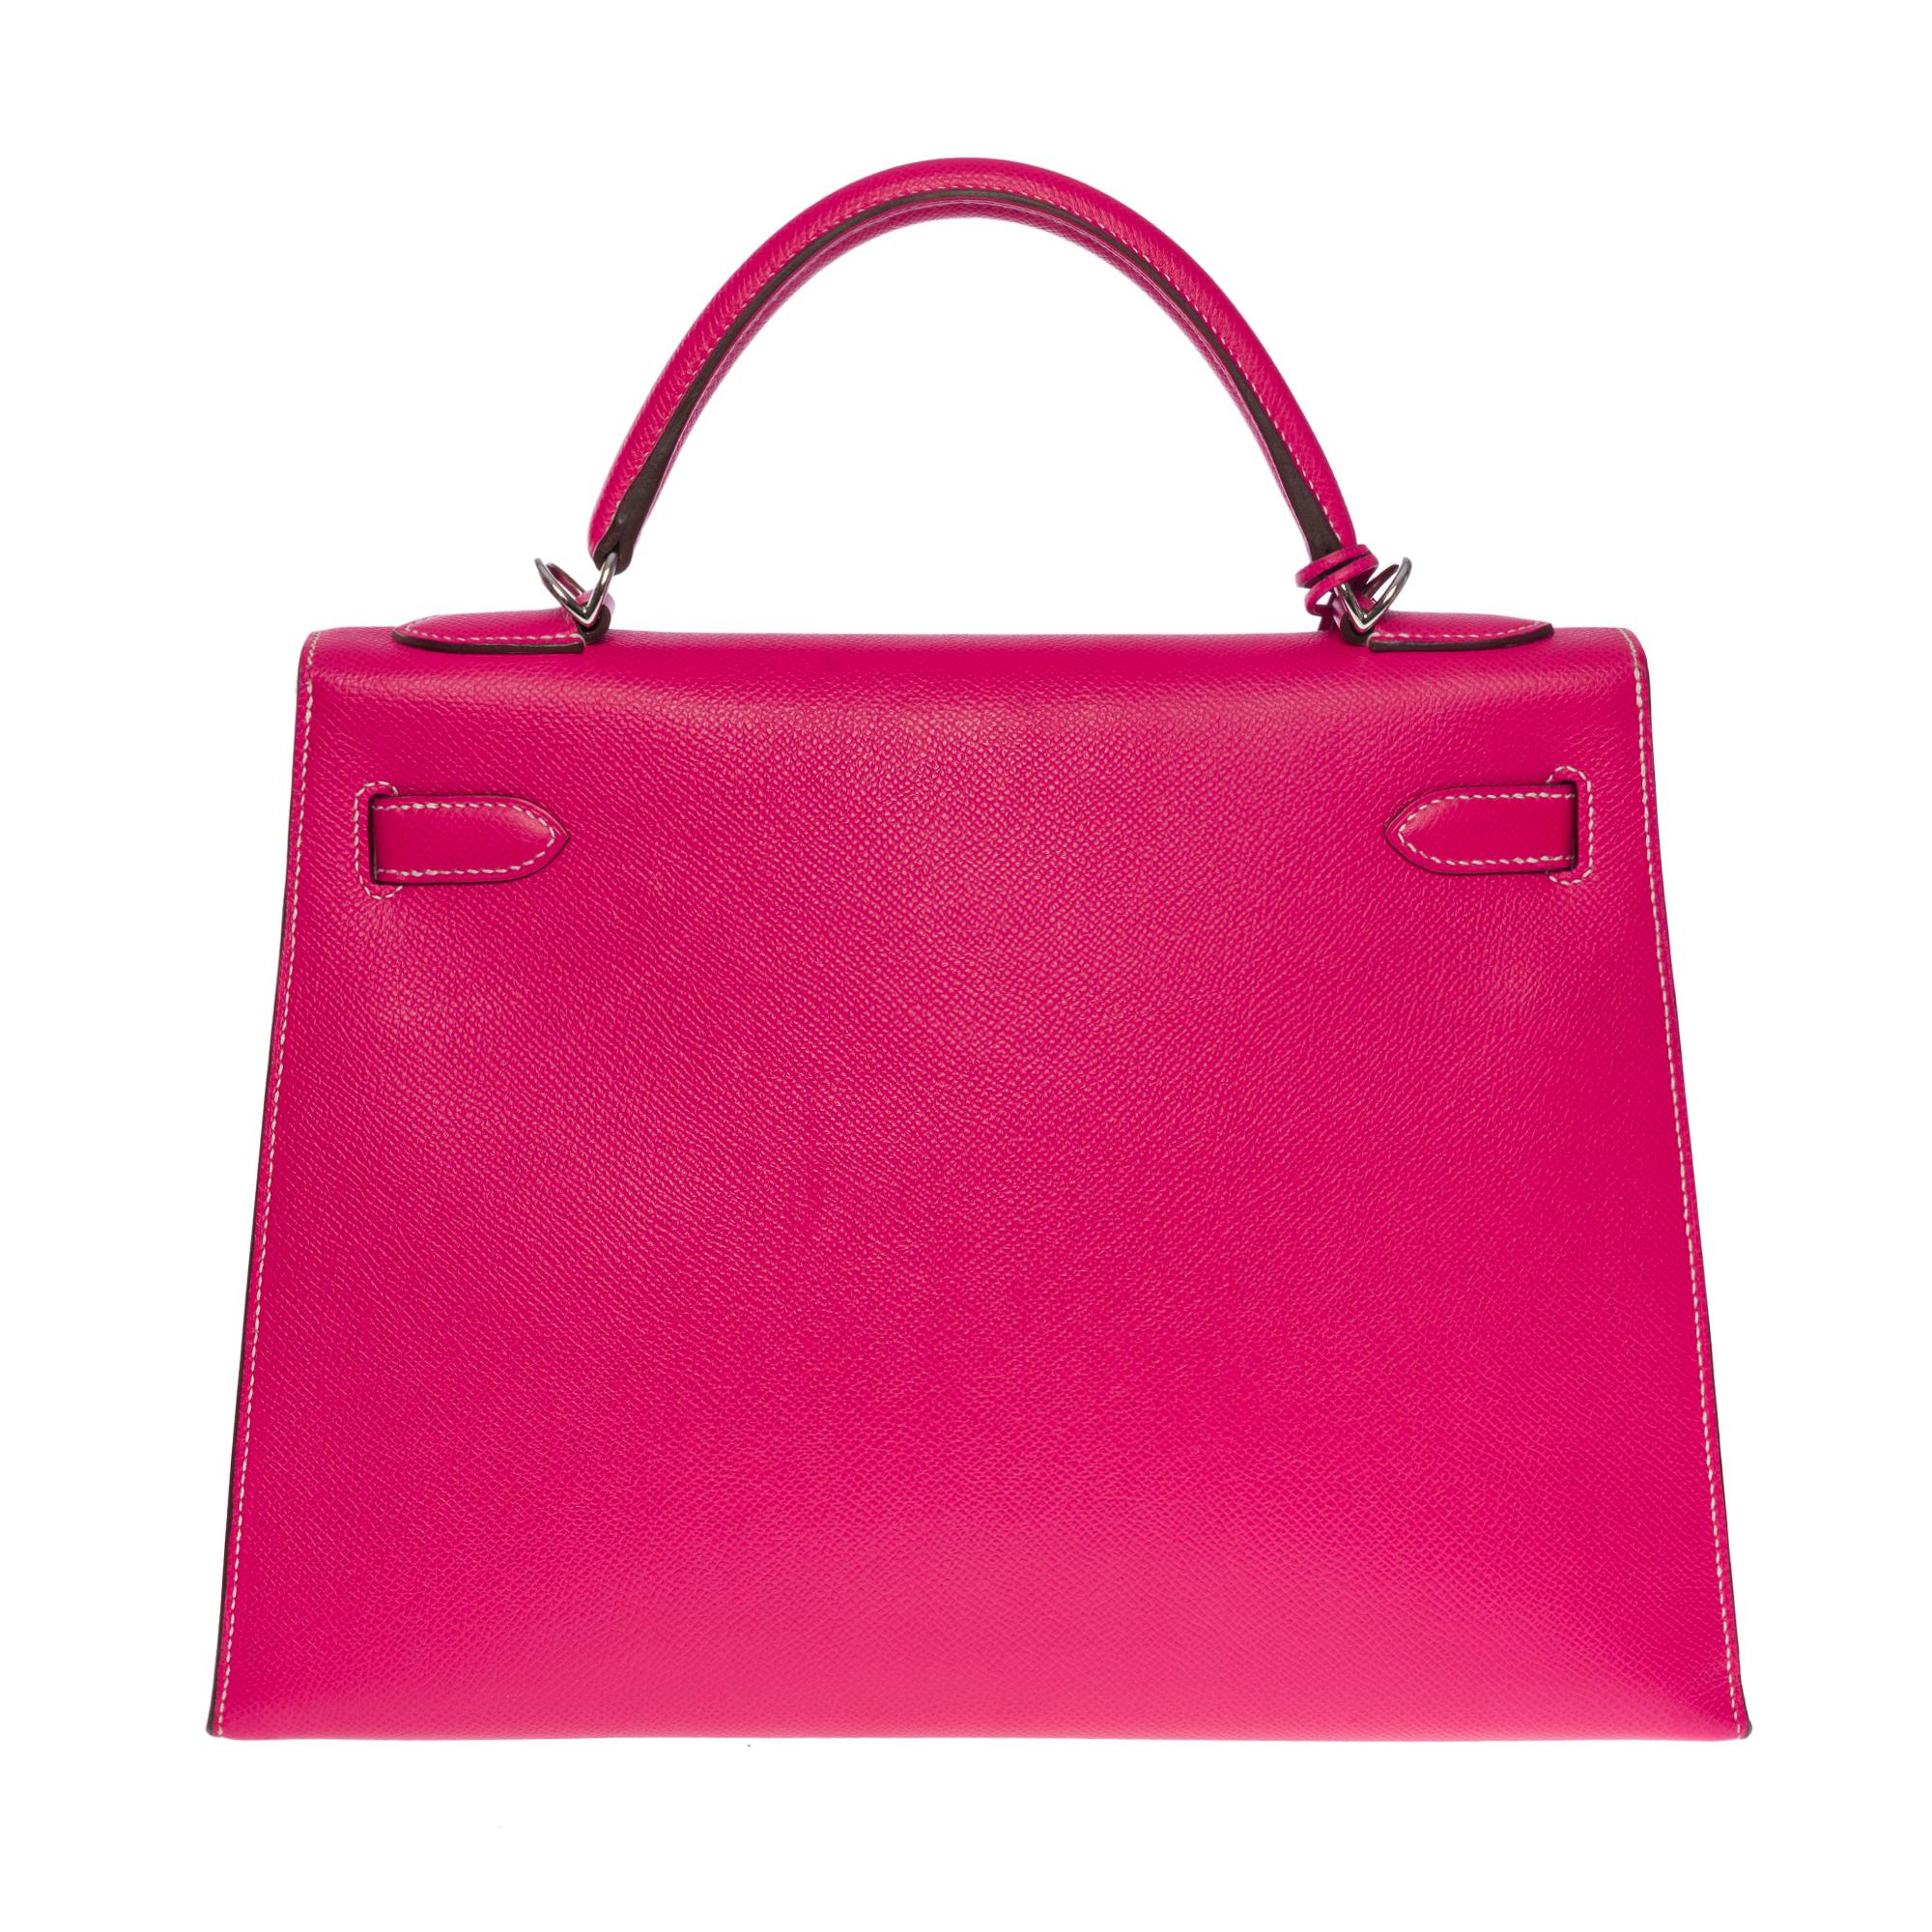 Red Hermès Kelly 32 sellier handbag strap (HSS) in Pink & purple Epsom leather, SHW